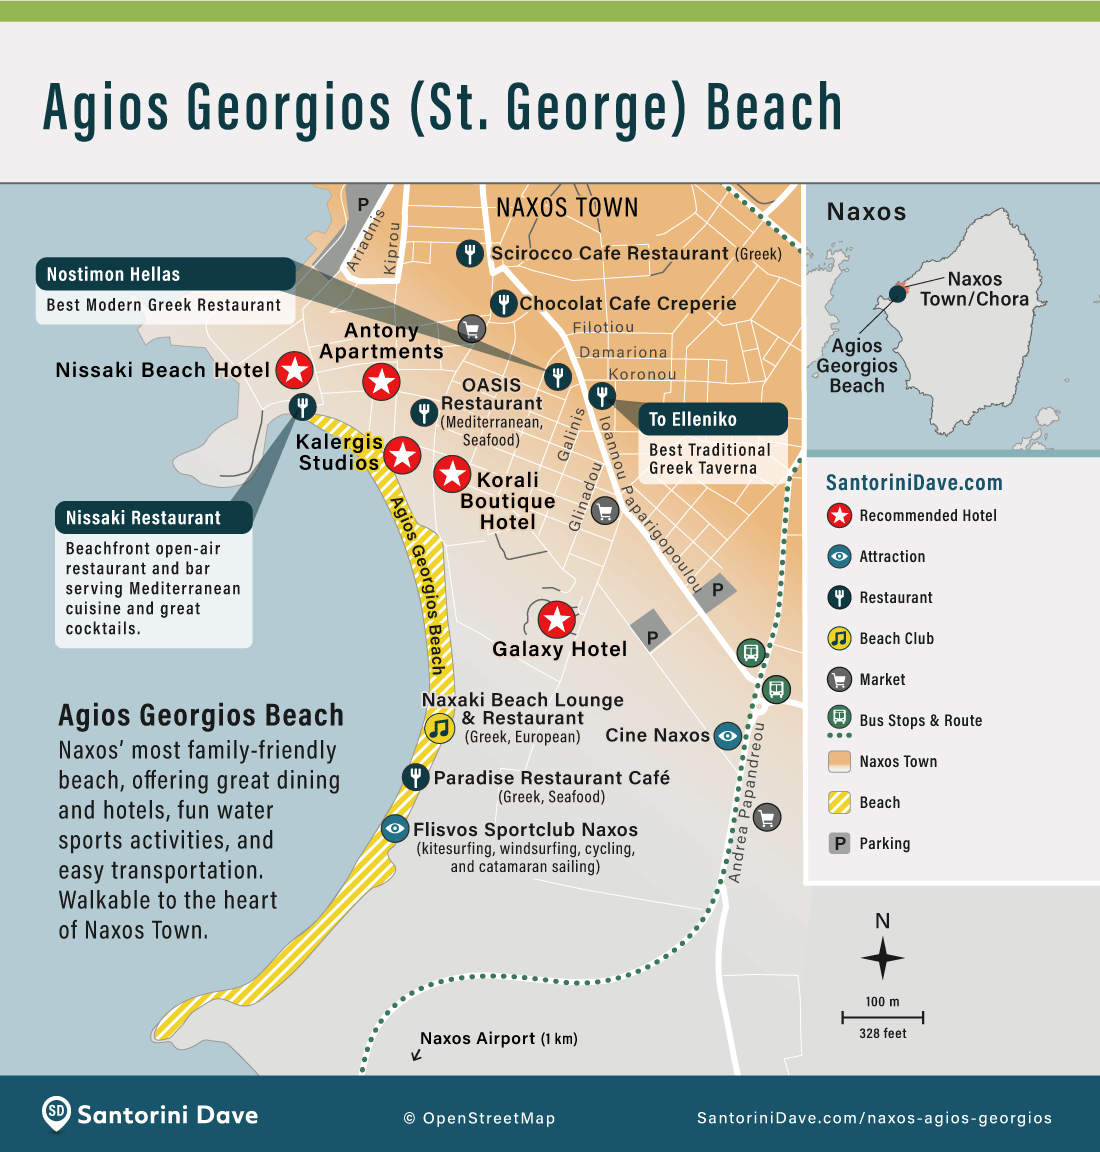 Map showing hotels, restaurants, and beach clubs at Agios Georgios Beach on Naxos.